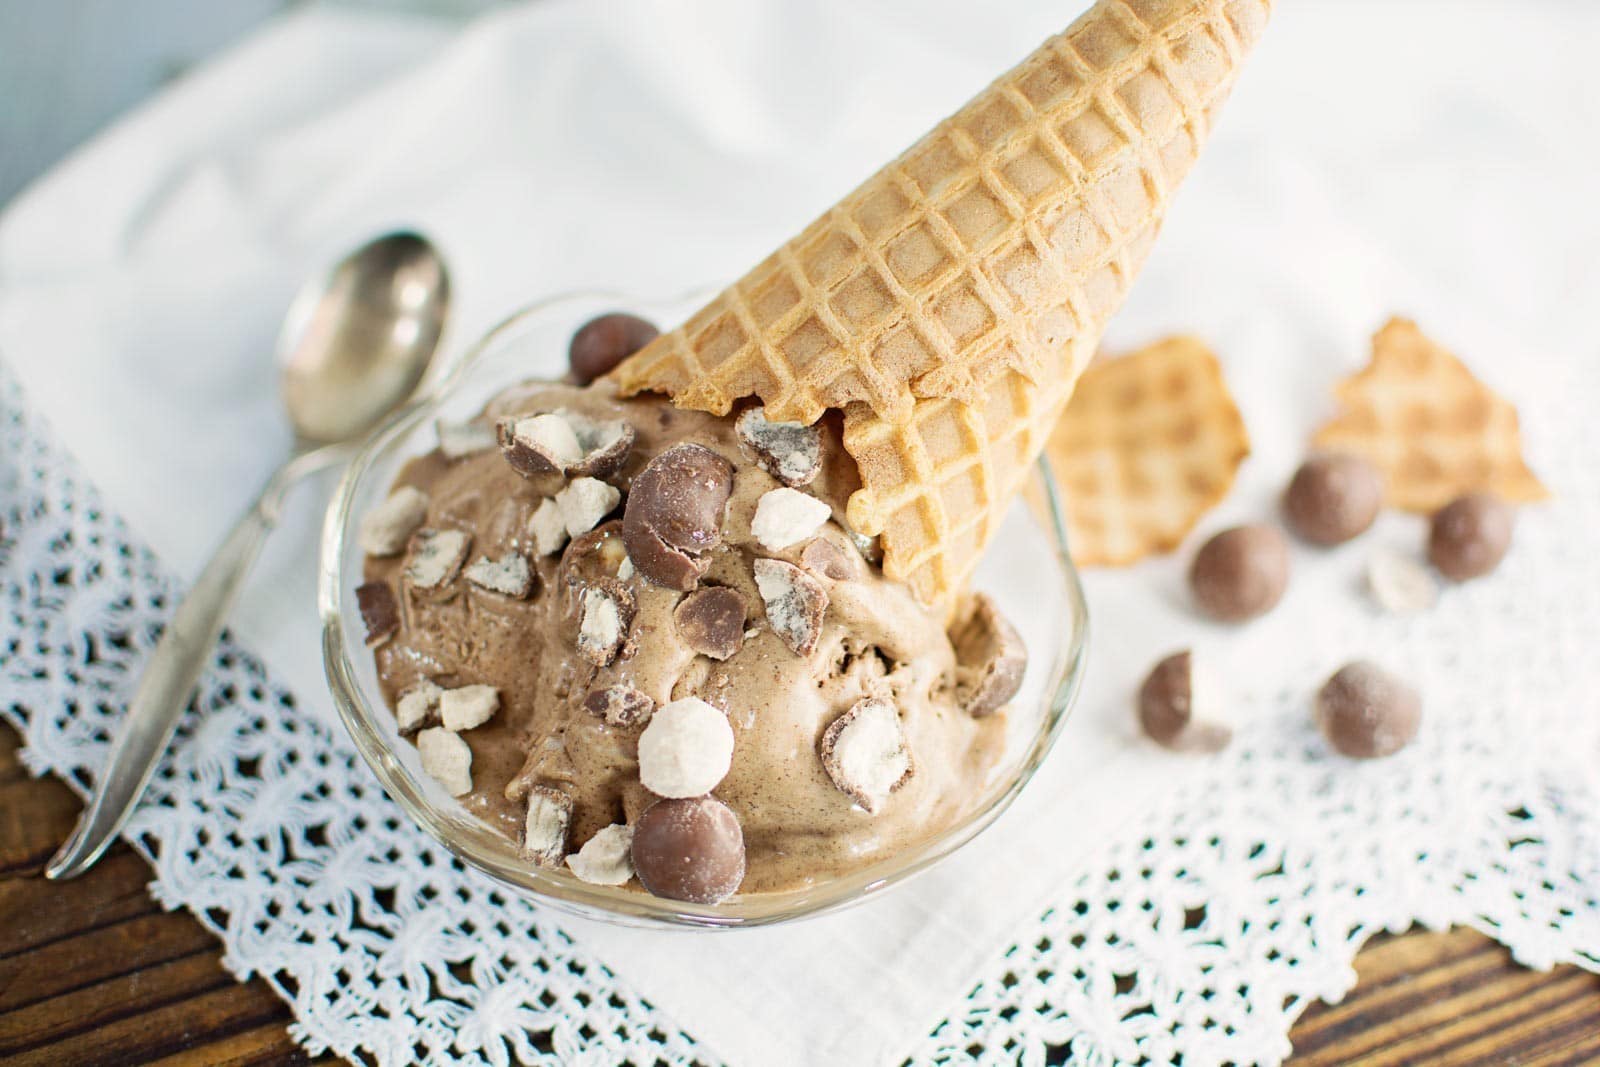 This. Ice. Cream. Chocolate Malt Ice Cream! Find the recipe @LittleFiggyFood 